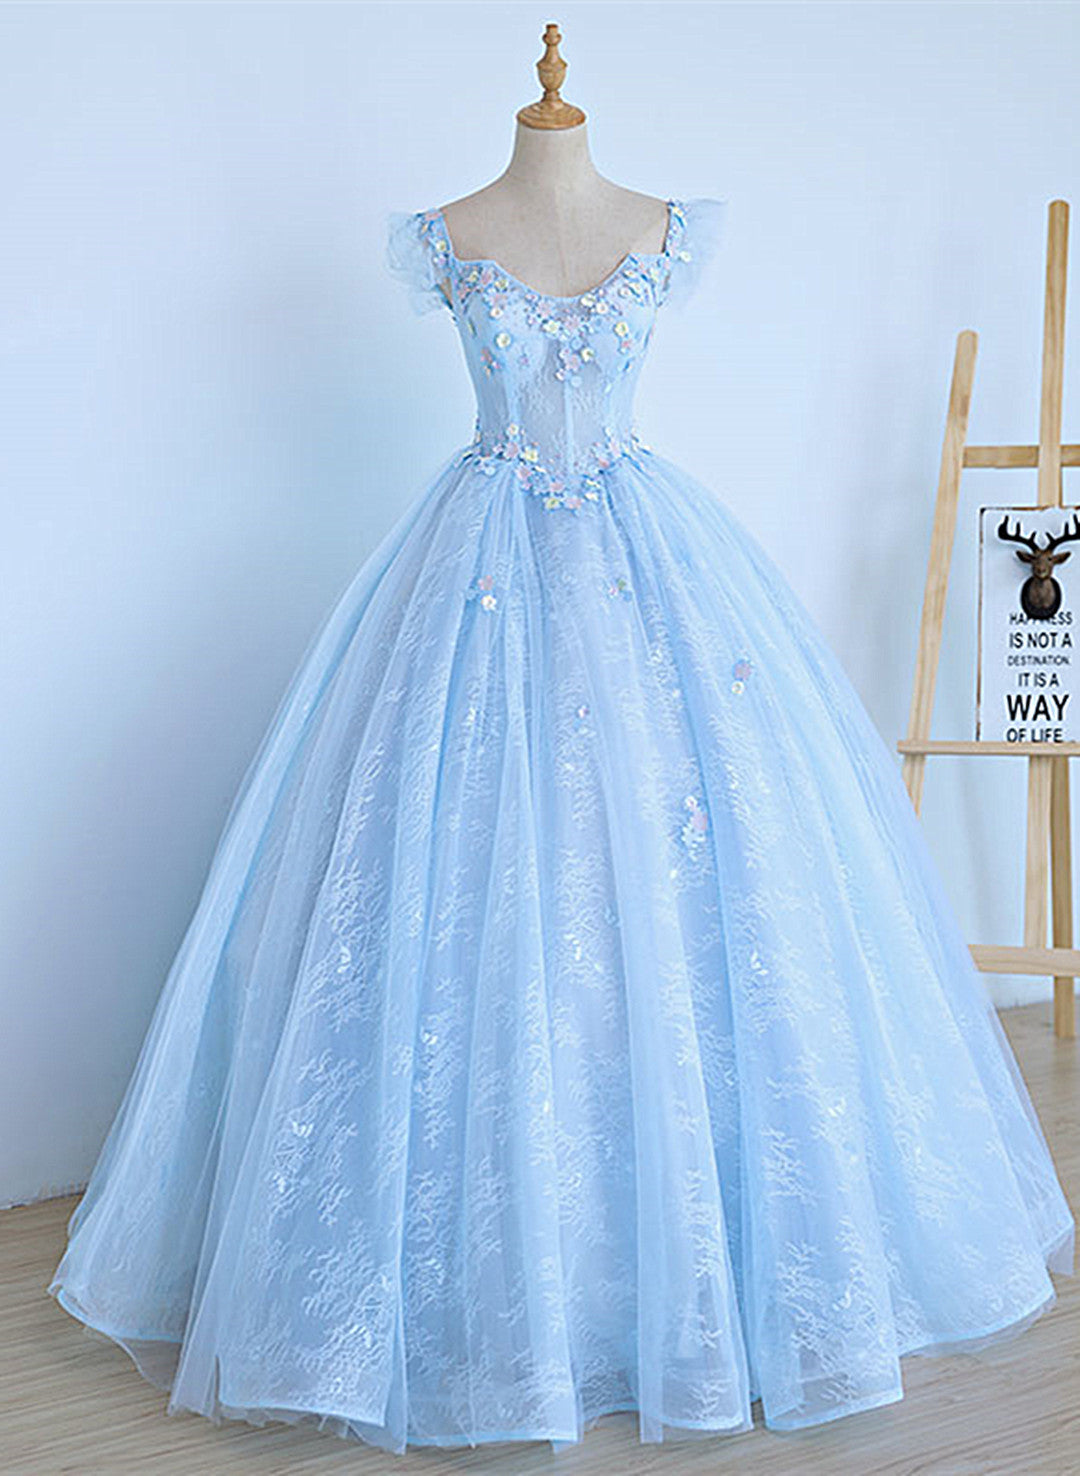 Sparklie Dress, Lovely Light Blue Lace Cap Sleeve Sweet 16 Prom Dress, Evening Dress